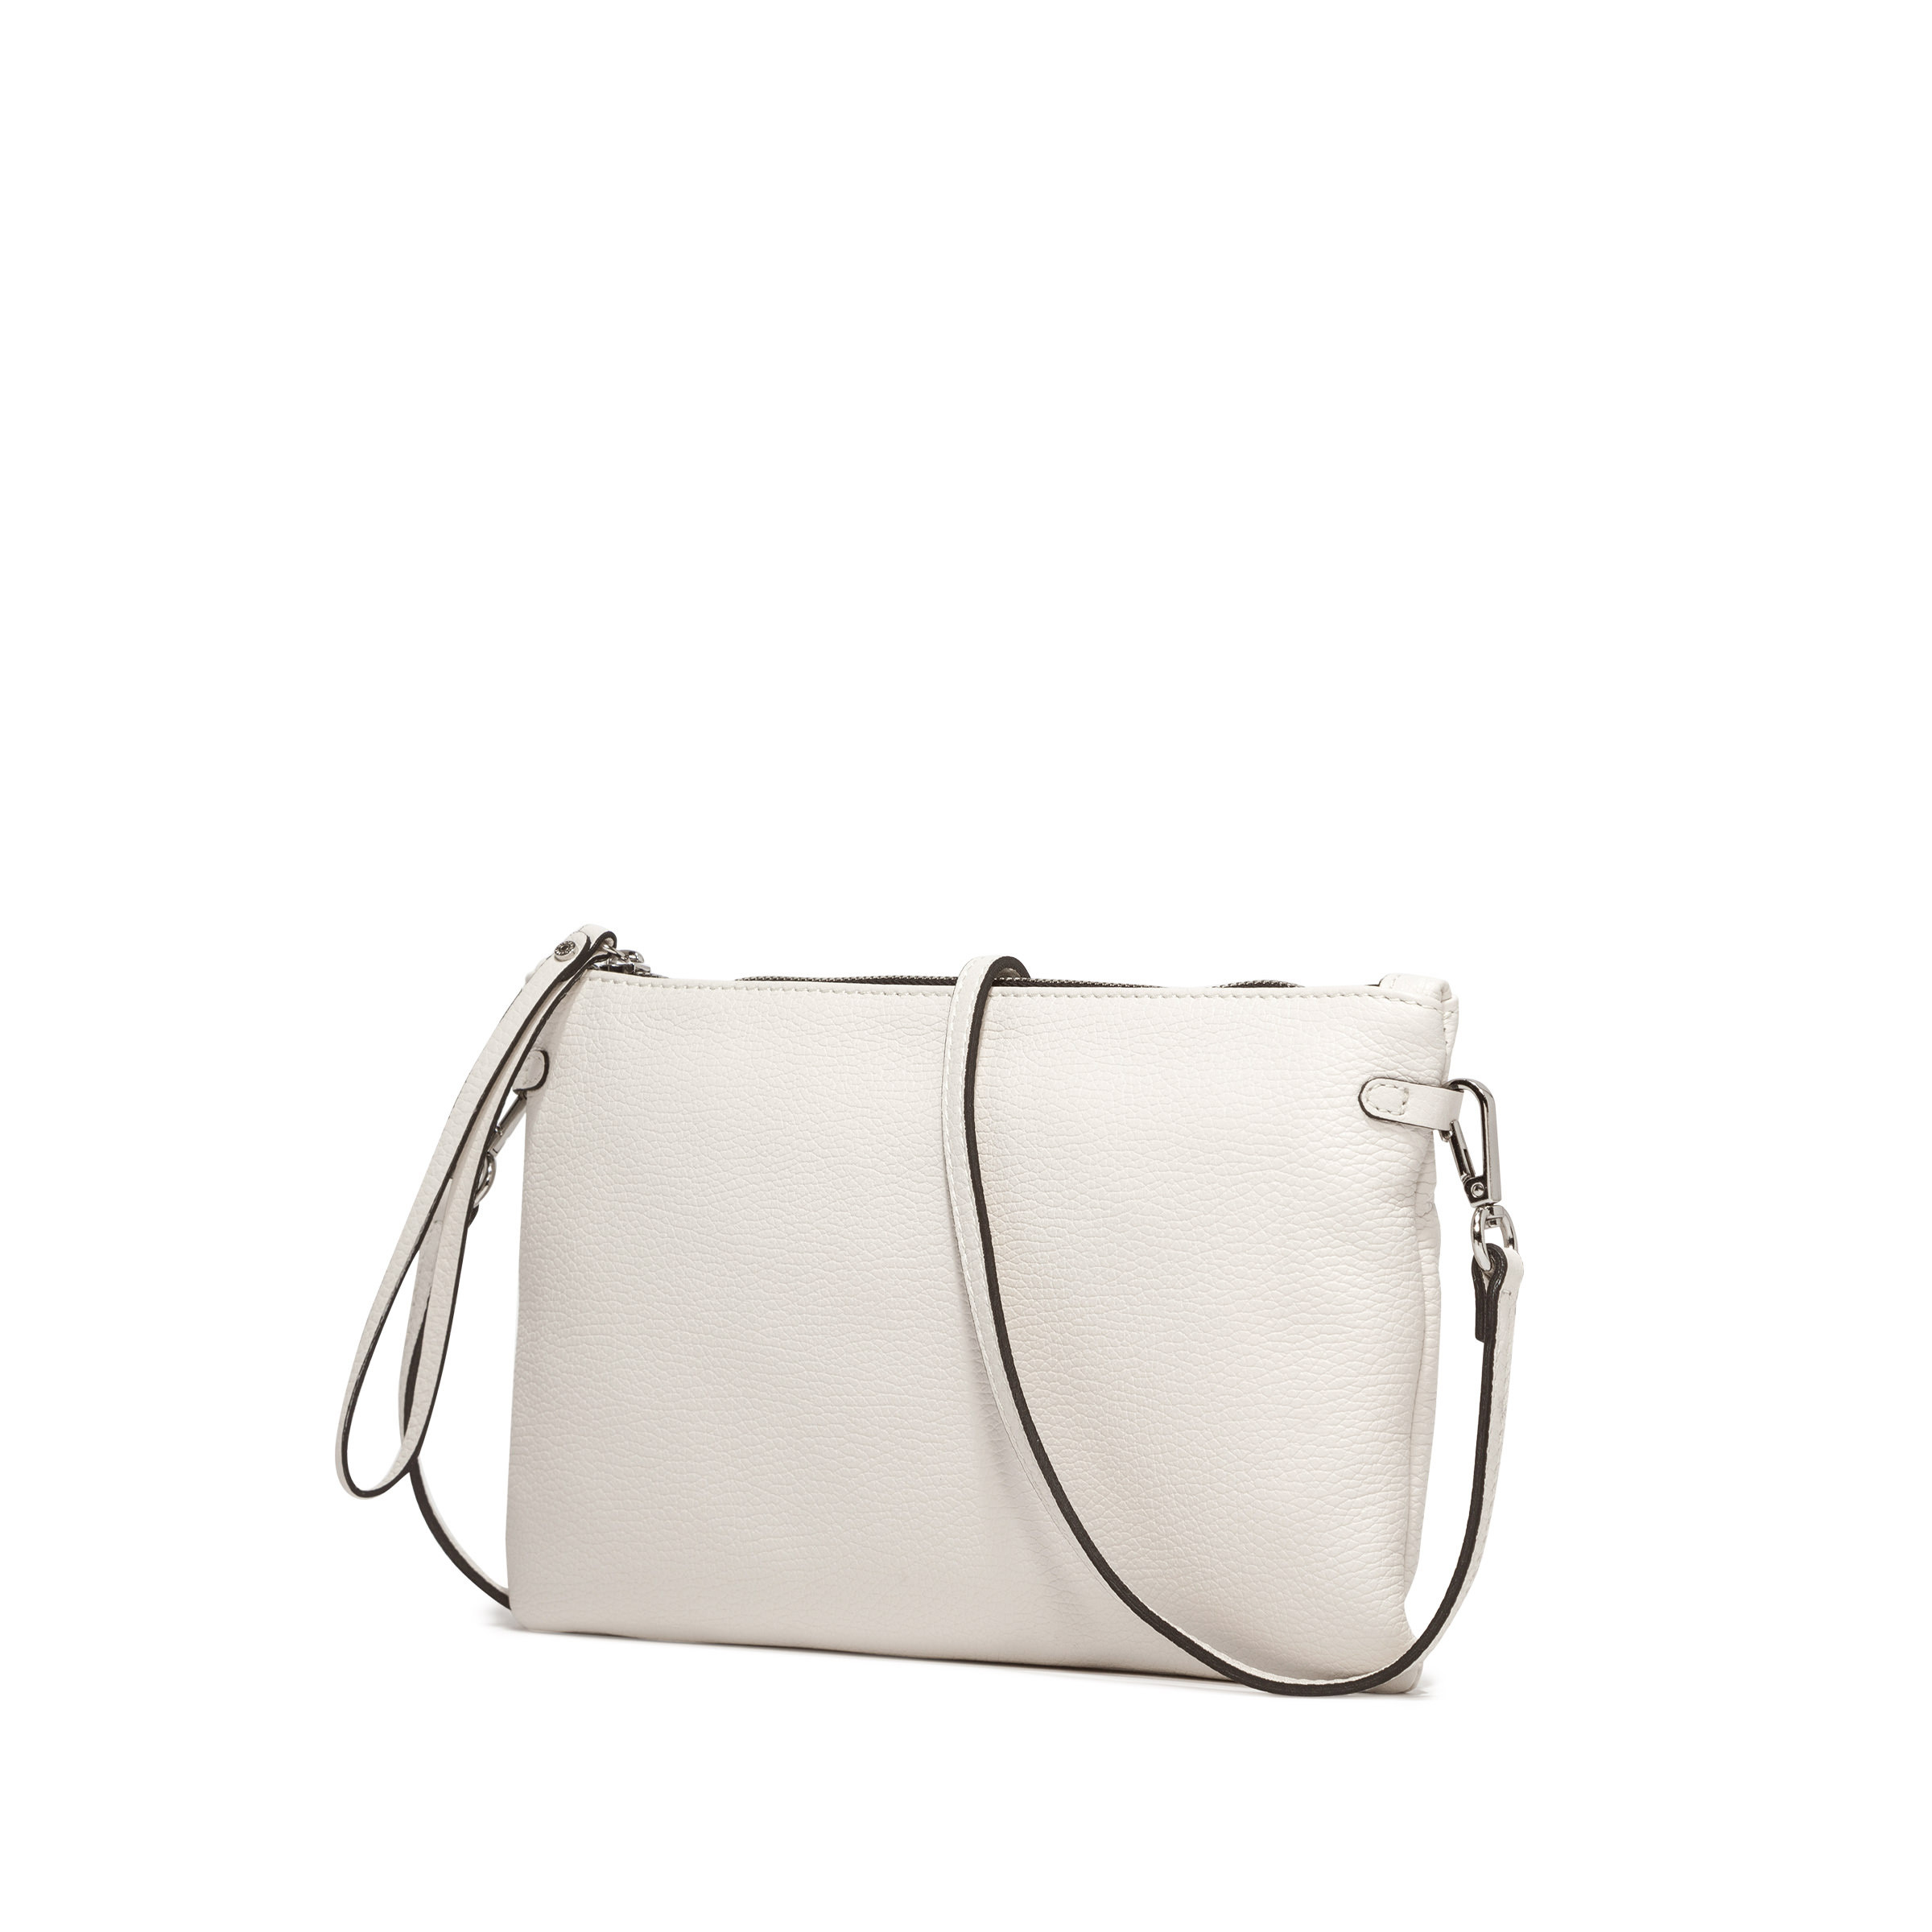 Gianni Chiarini - Hermy leather bag, White, large image number 1